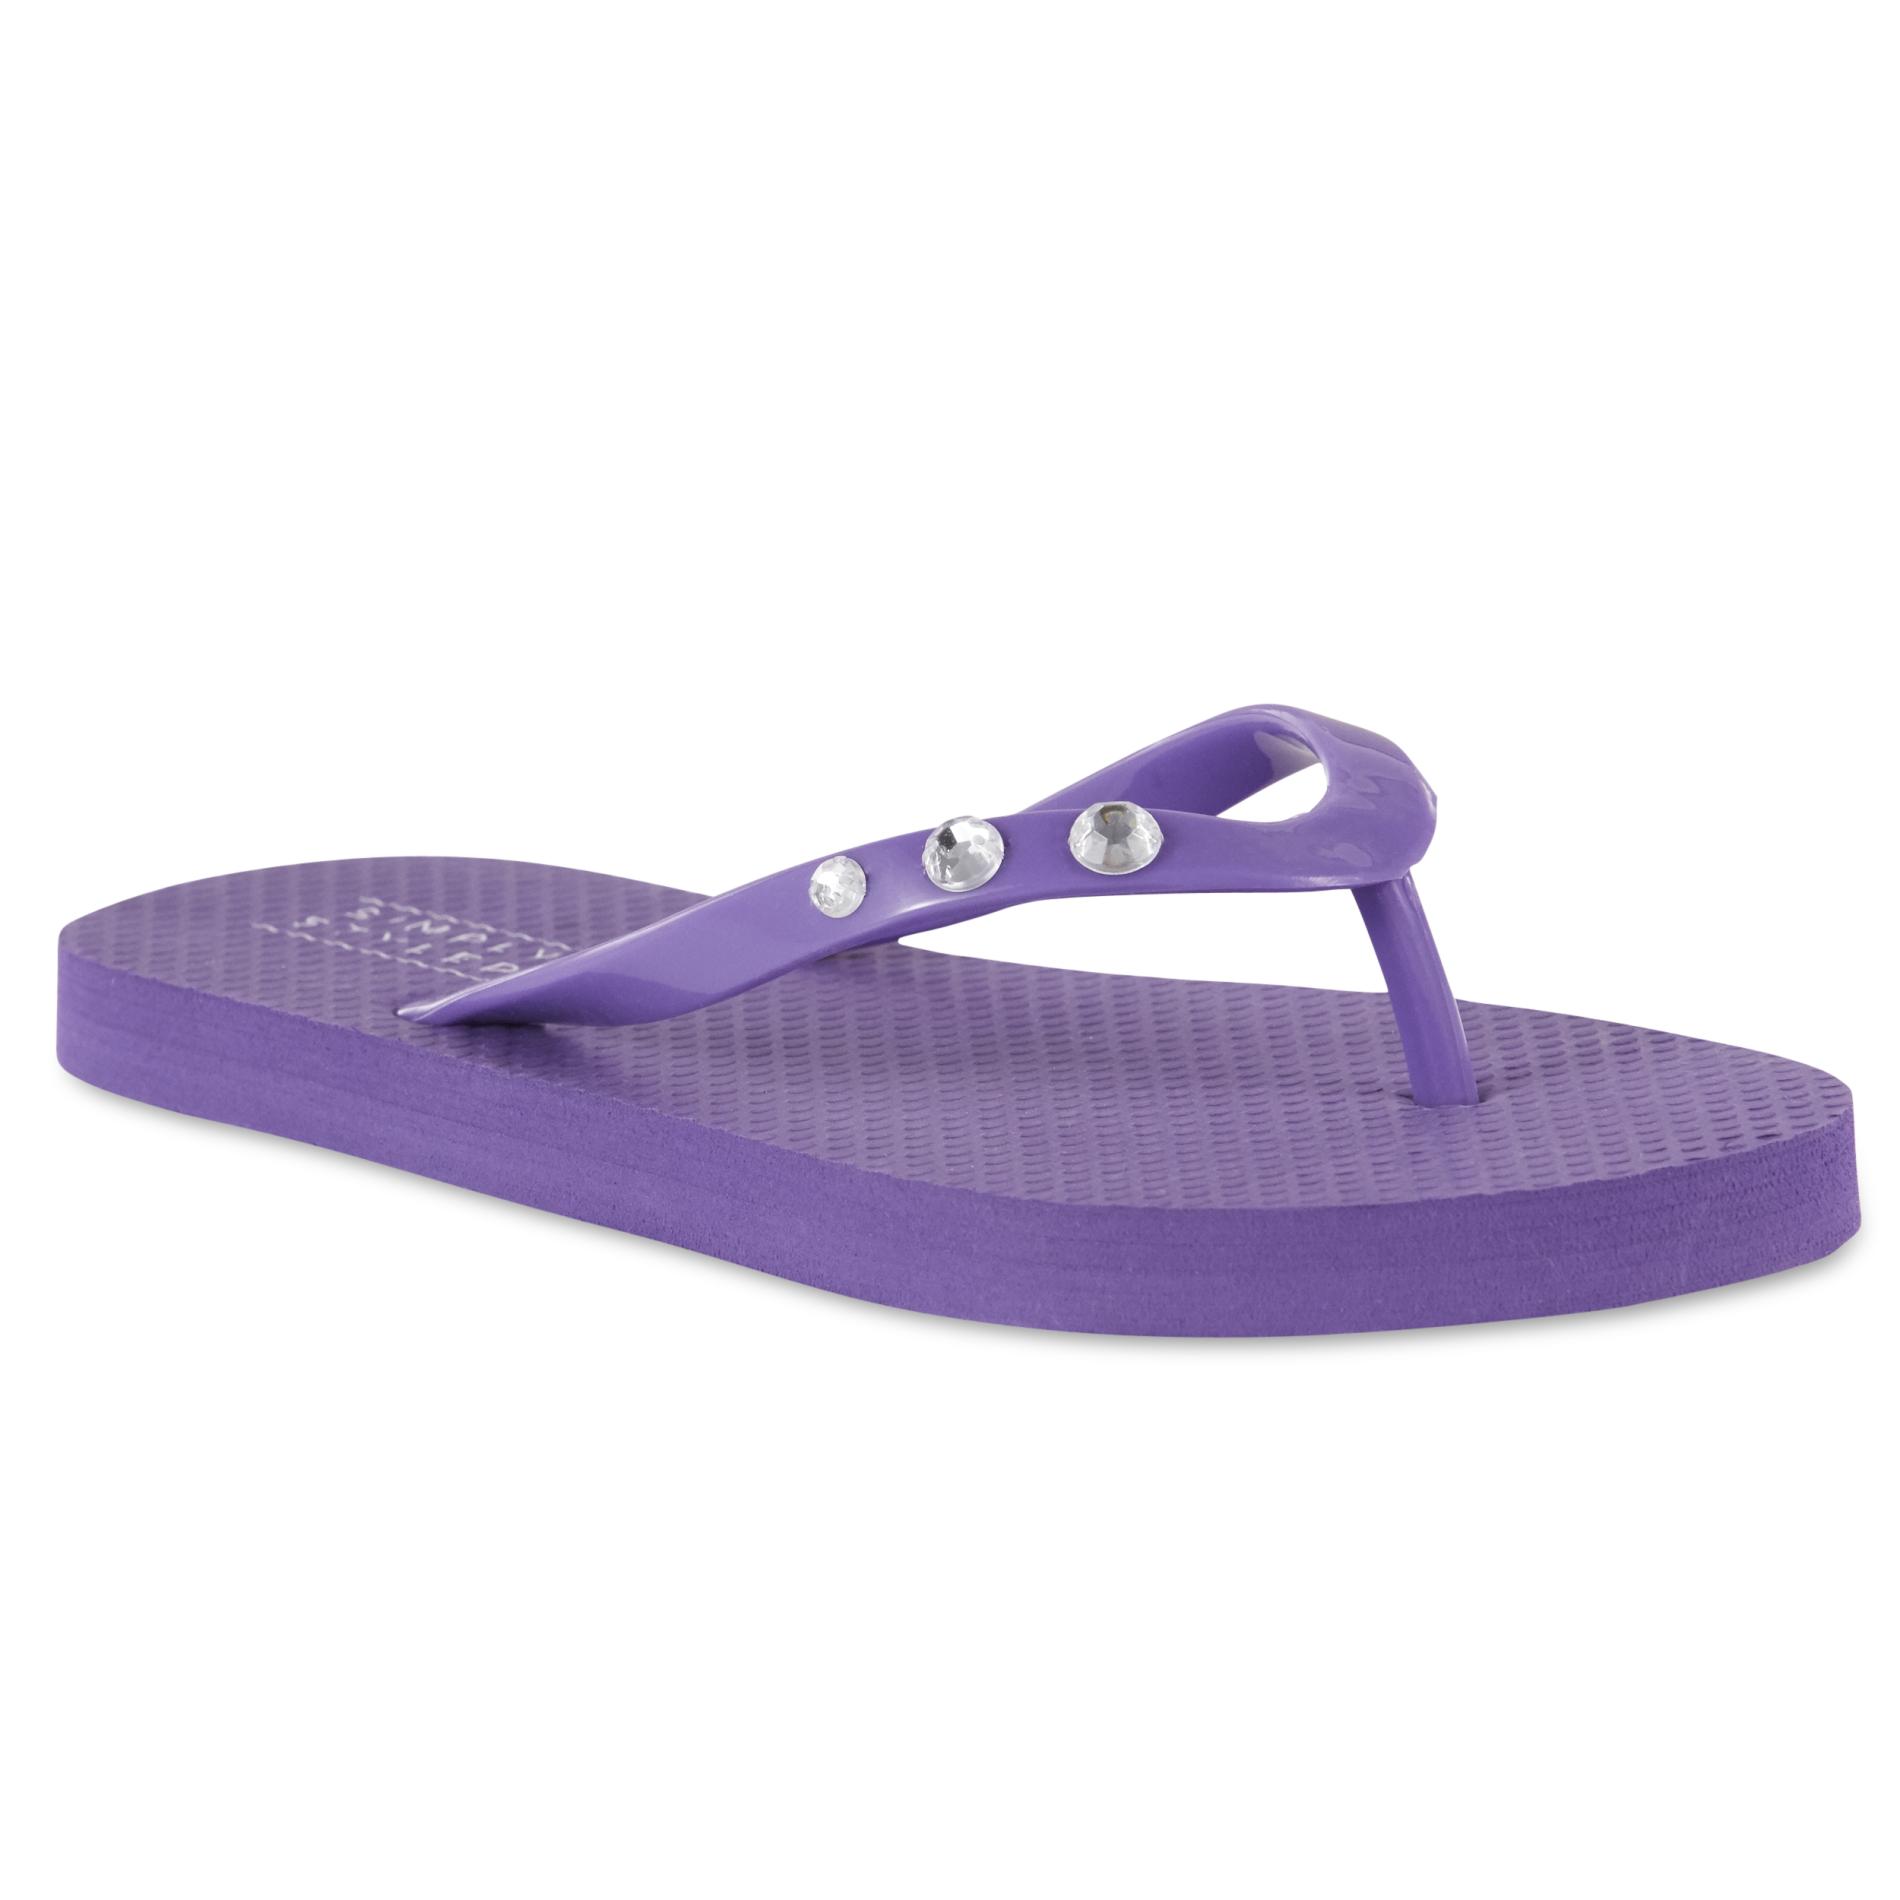 Simply Styled Girls' Yoga Flip-Flop Sandal - Purple